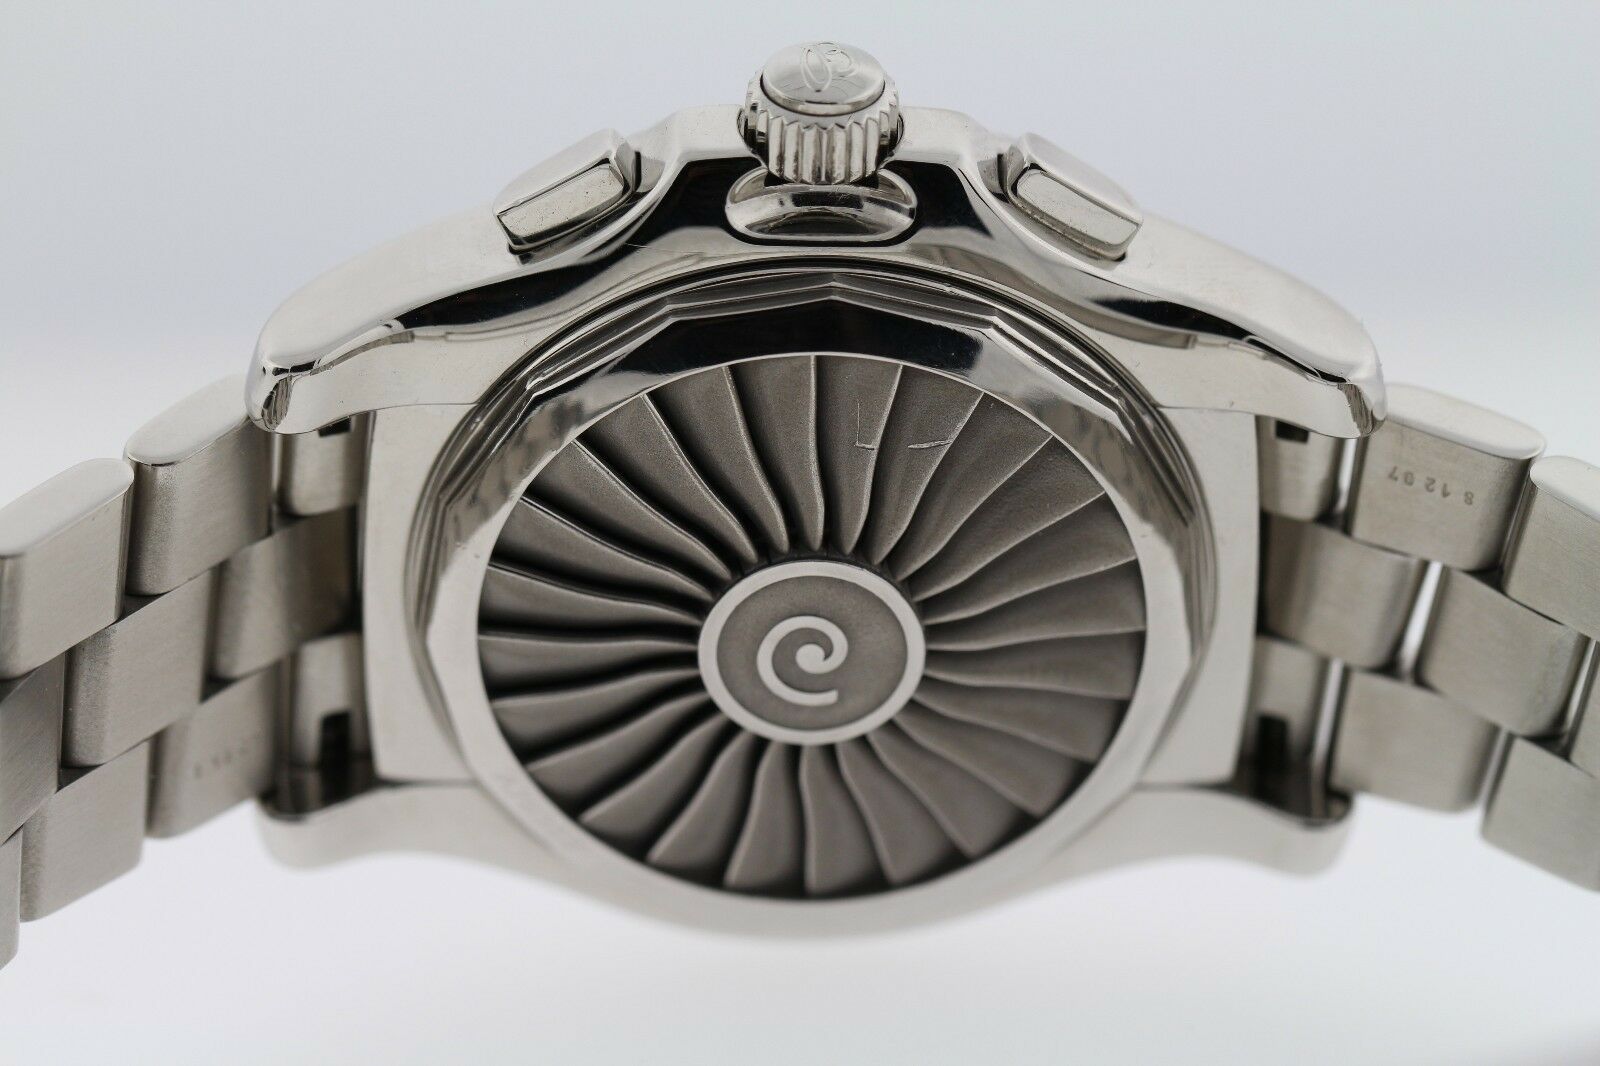 Breitling Airwolf Stainless Steel 44mm Men's Digital/Analog Watch A7836334/F551